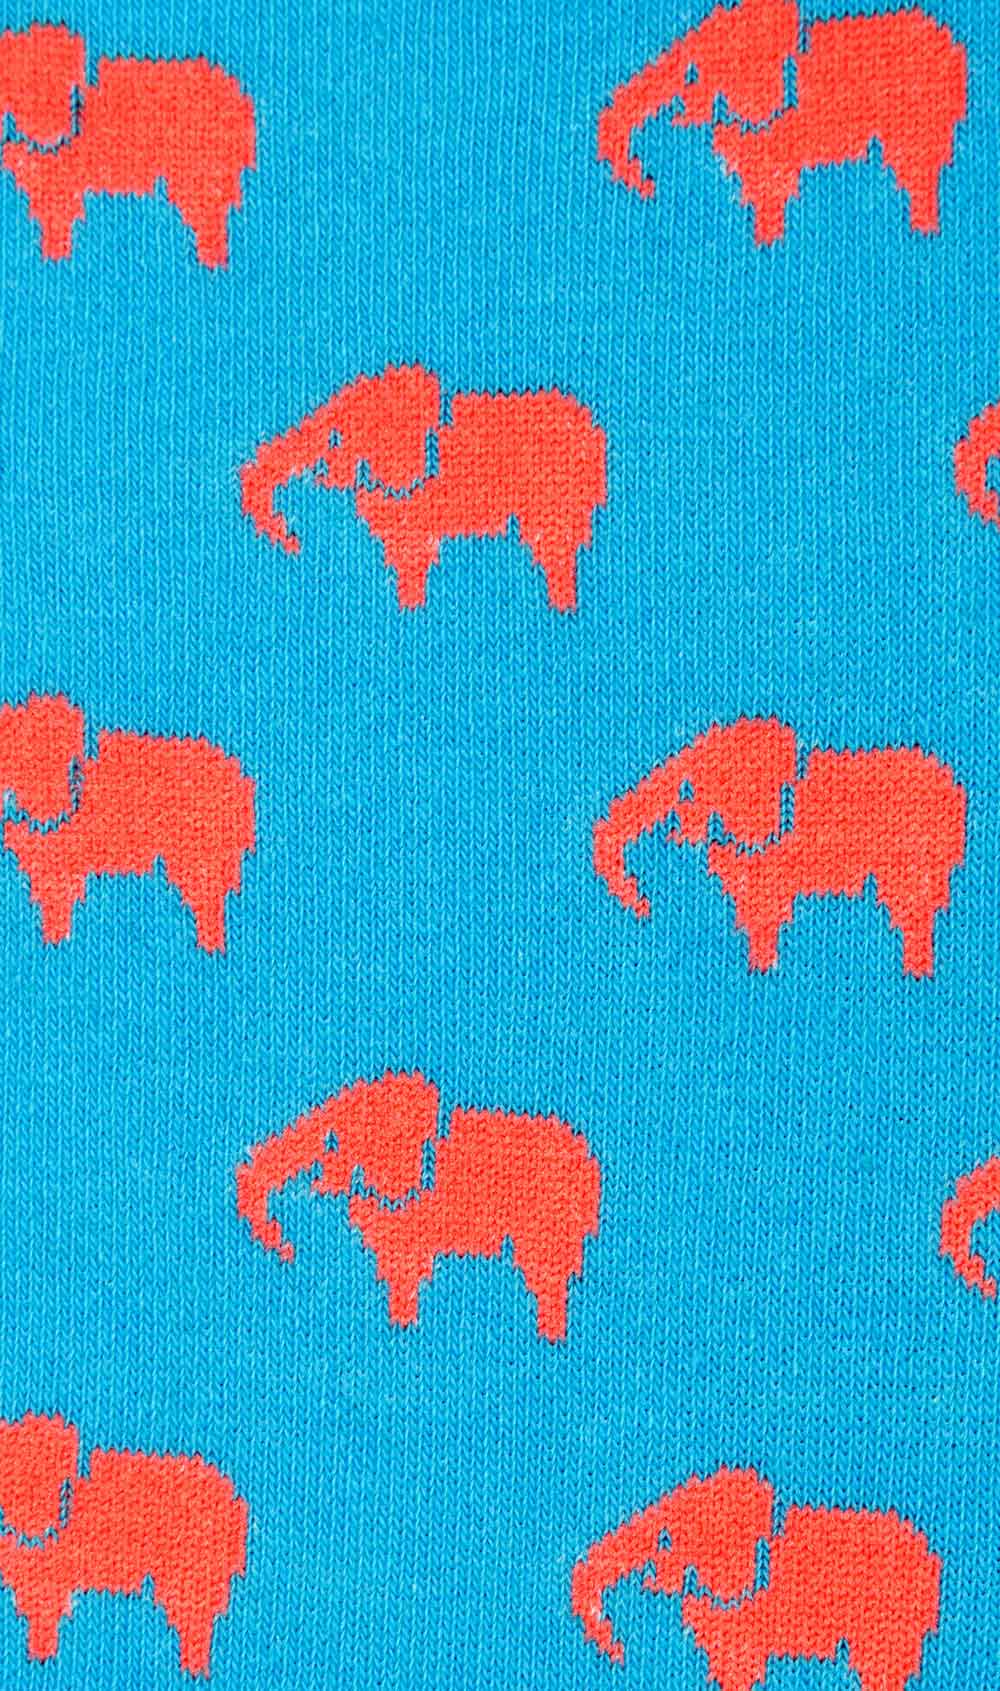 Pink Elephant Socks Fabric